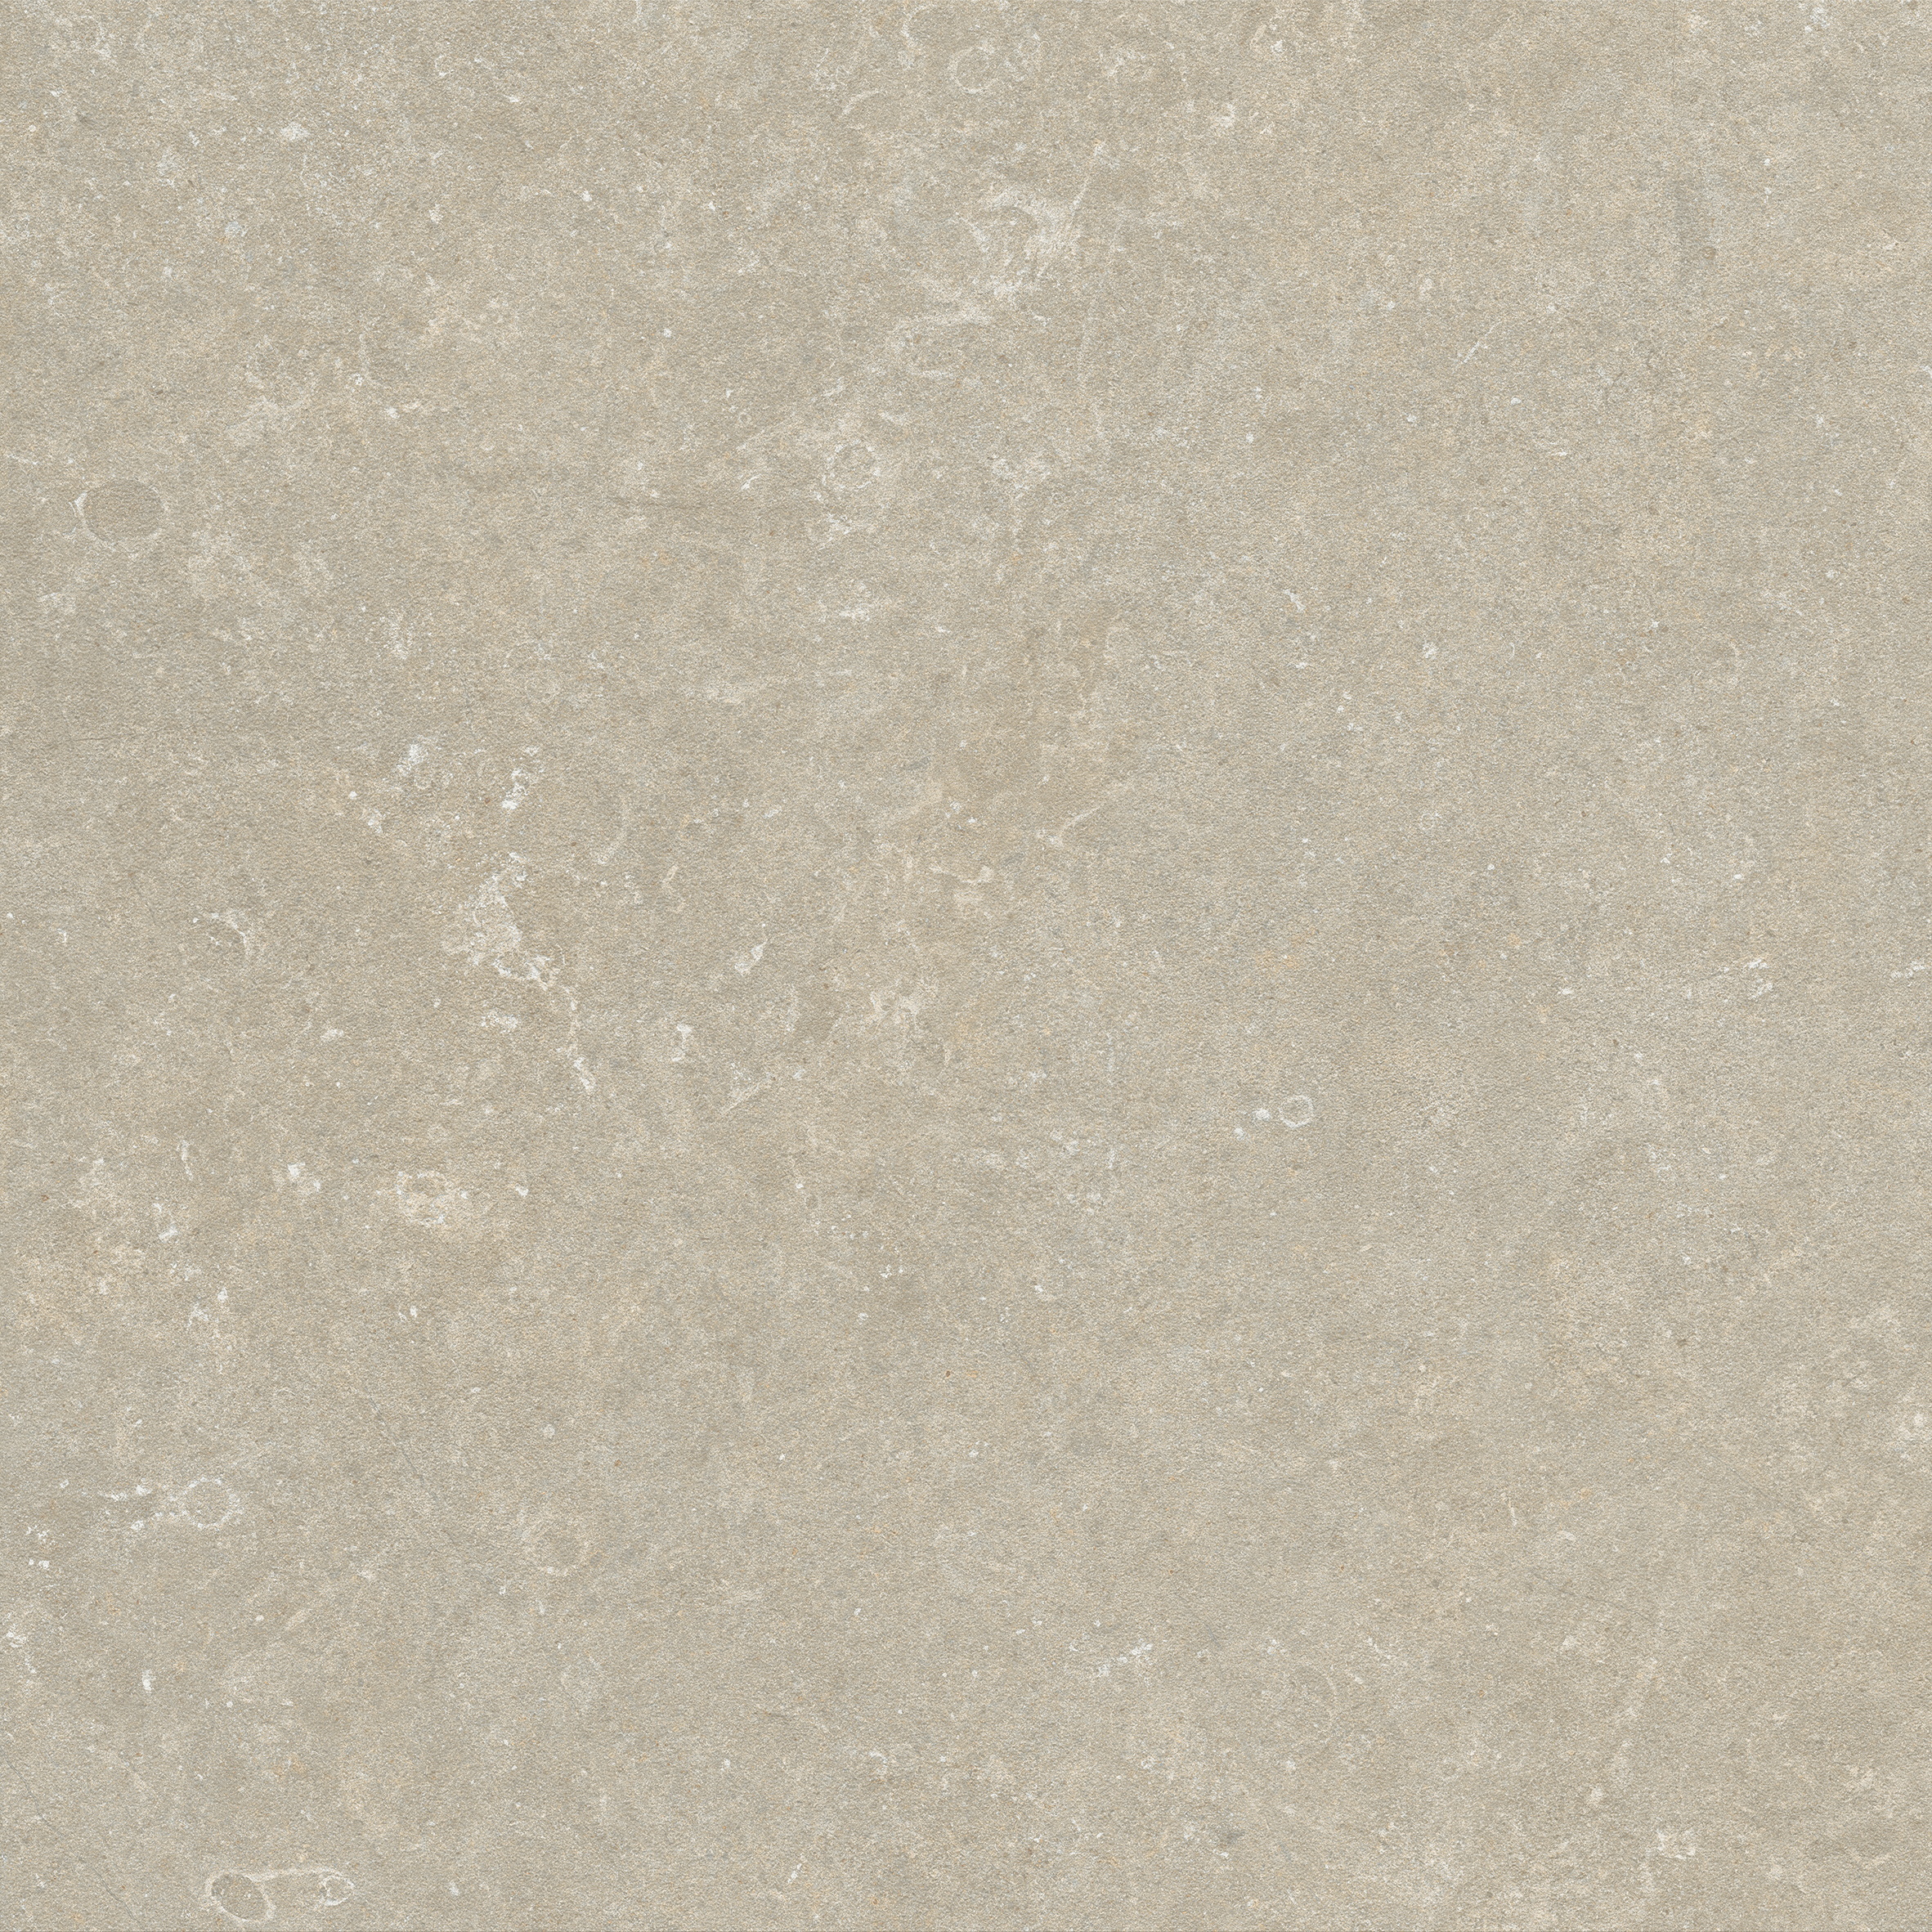 Marca Corona Arkistyle Limy Naturale – Matt J217 naturale – matt 60x60cm rectified 9mm